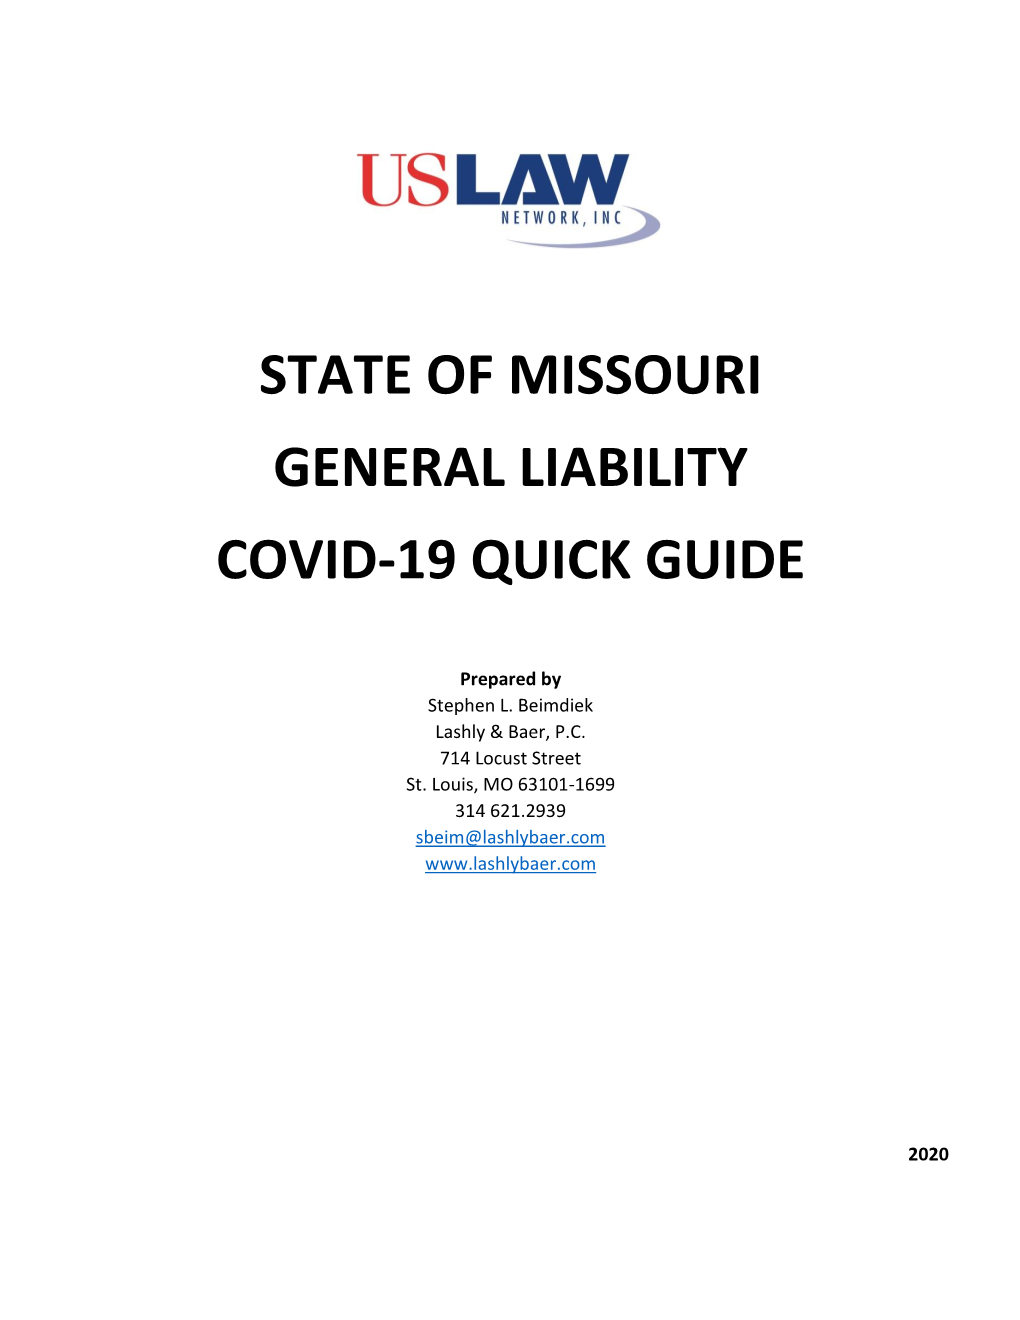 State of Missouri General Liability Covid-19 Quick Guide